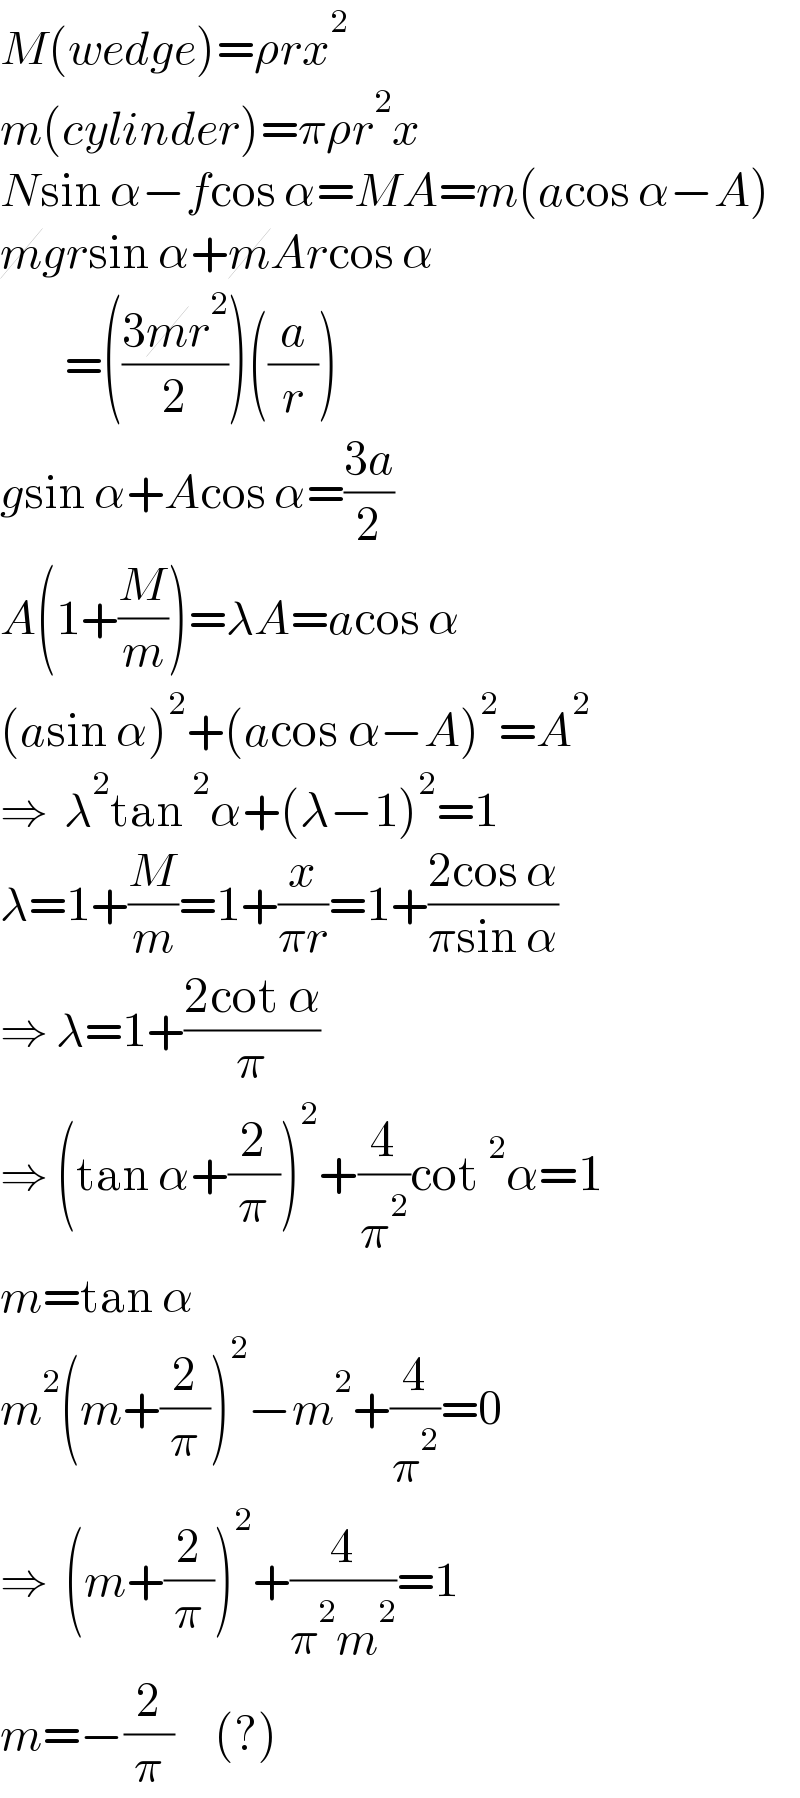 M(wedge)=ρrx^2   m(cylinder)=πρr^2 x  Nsin α−fcos α=MA=m(acos α−A)  mgrsin α+mArcos α          =(((3mr^2 )/2))((a/r))  gsin α+Acos α=((3a)/2)  A(1+(M/m))=λA=acos α  (asin α)^2 +(acos α−A)^2 =A^2   ⇒  λ^2 tan^2 α+(λ−1)^2 =1  λ=1+(M/m)=1+(x/(πr))=1+((2cos α)/(πsin α))  ⇒ λ=1+((2cot α)/π)  ⇒ (tan α+(2/π))^2 +(4/π^2 )cot^2 α=1  m=tan α  m^2 (m+(2/π))^2 −m^2 +(4/π^2 )=0  ⇒  (m+(2/π))^2 +(4/(π^2 m^2 ))=1  m=−(2/π)     (?)  